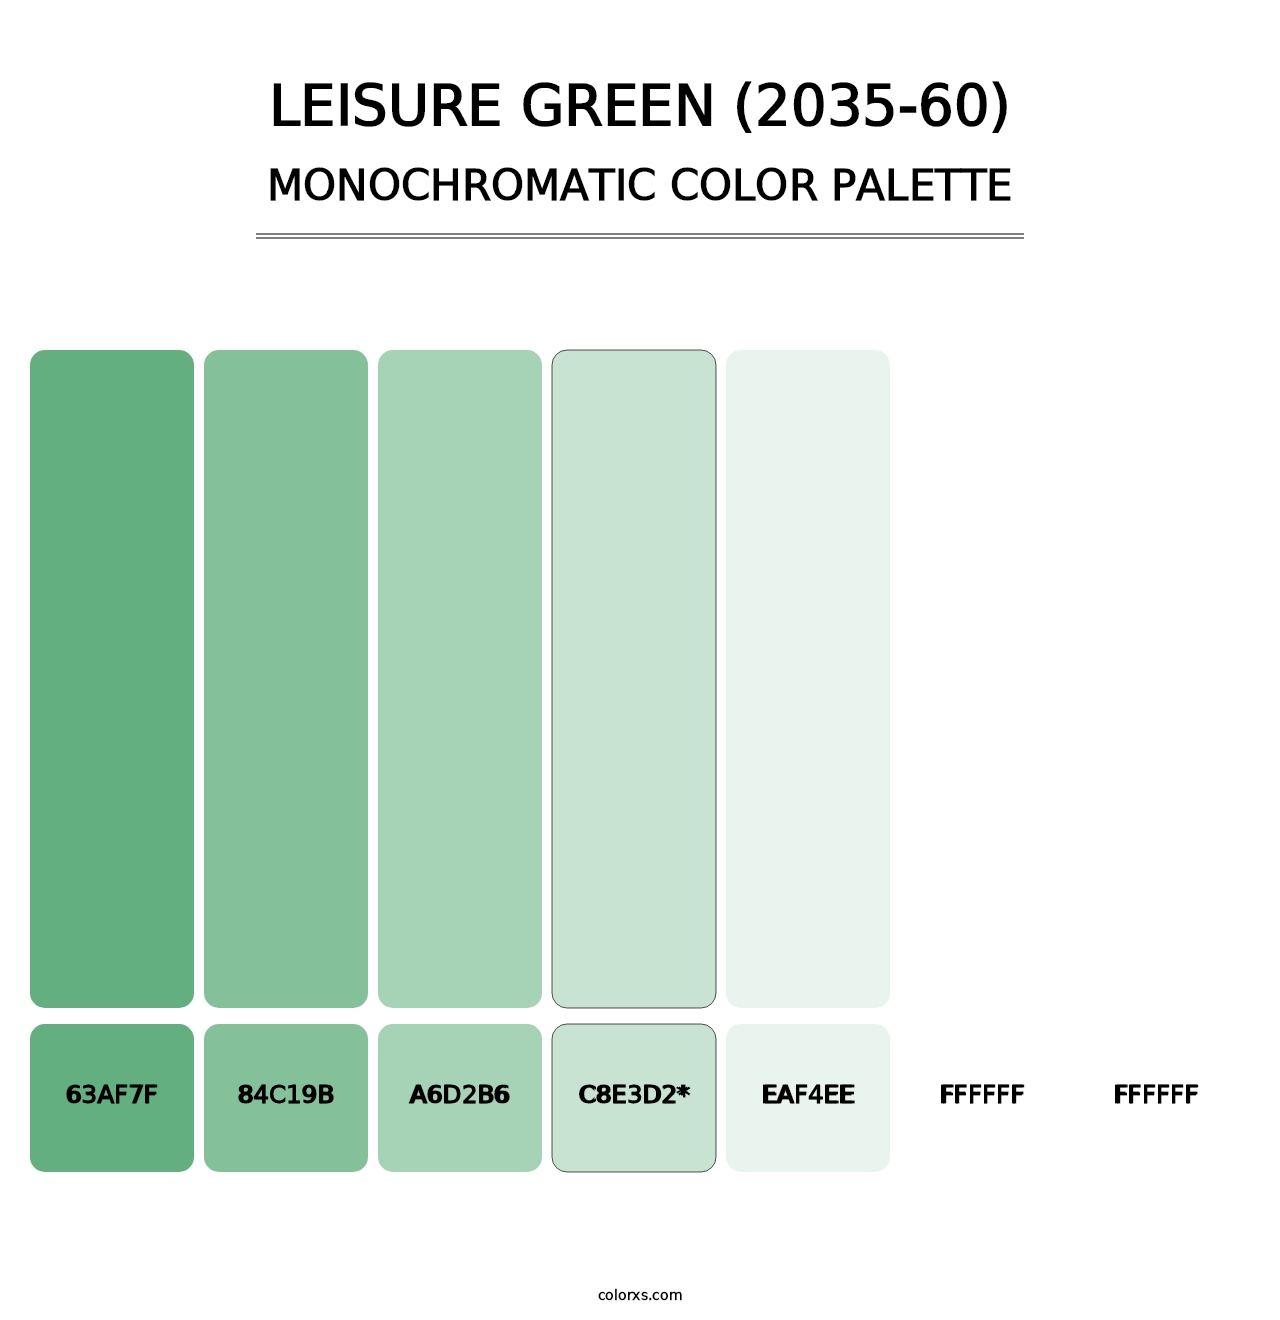 Leisure Green (2035-60) - Monochromatic Color Palette